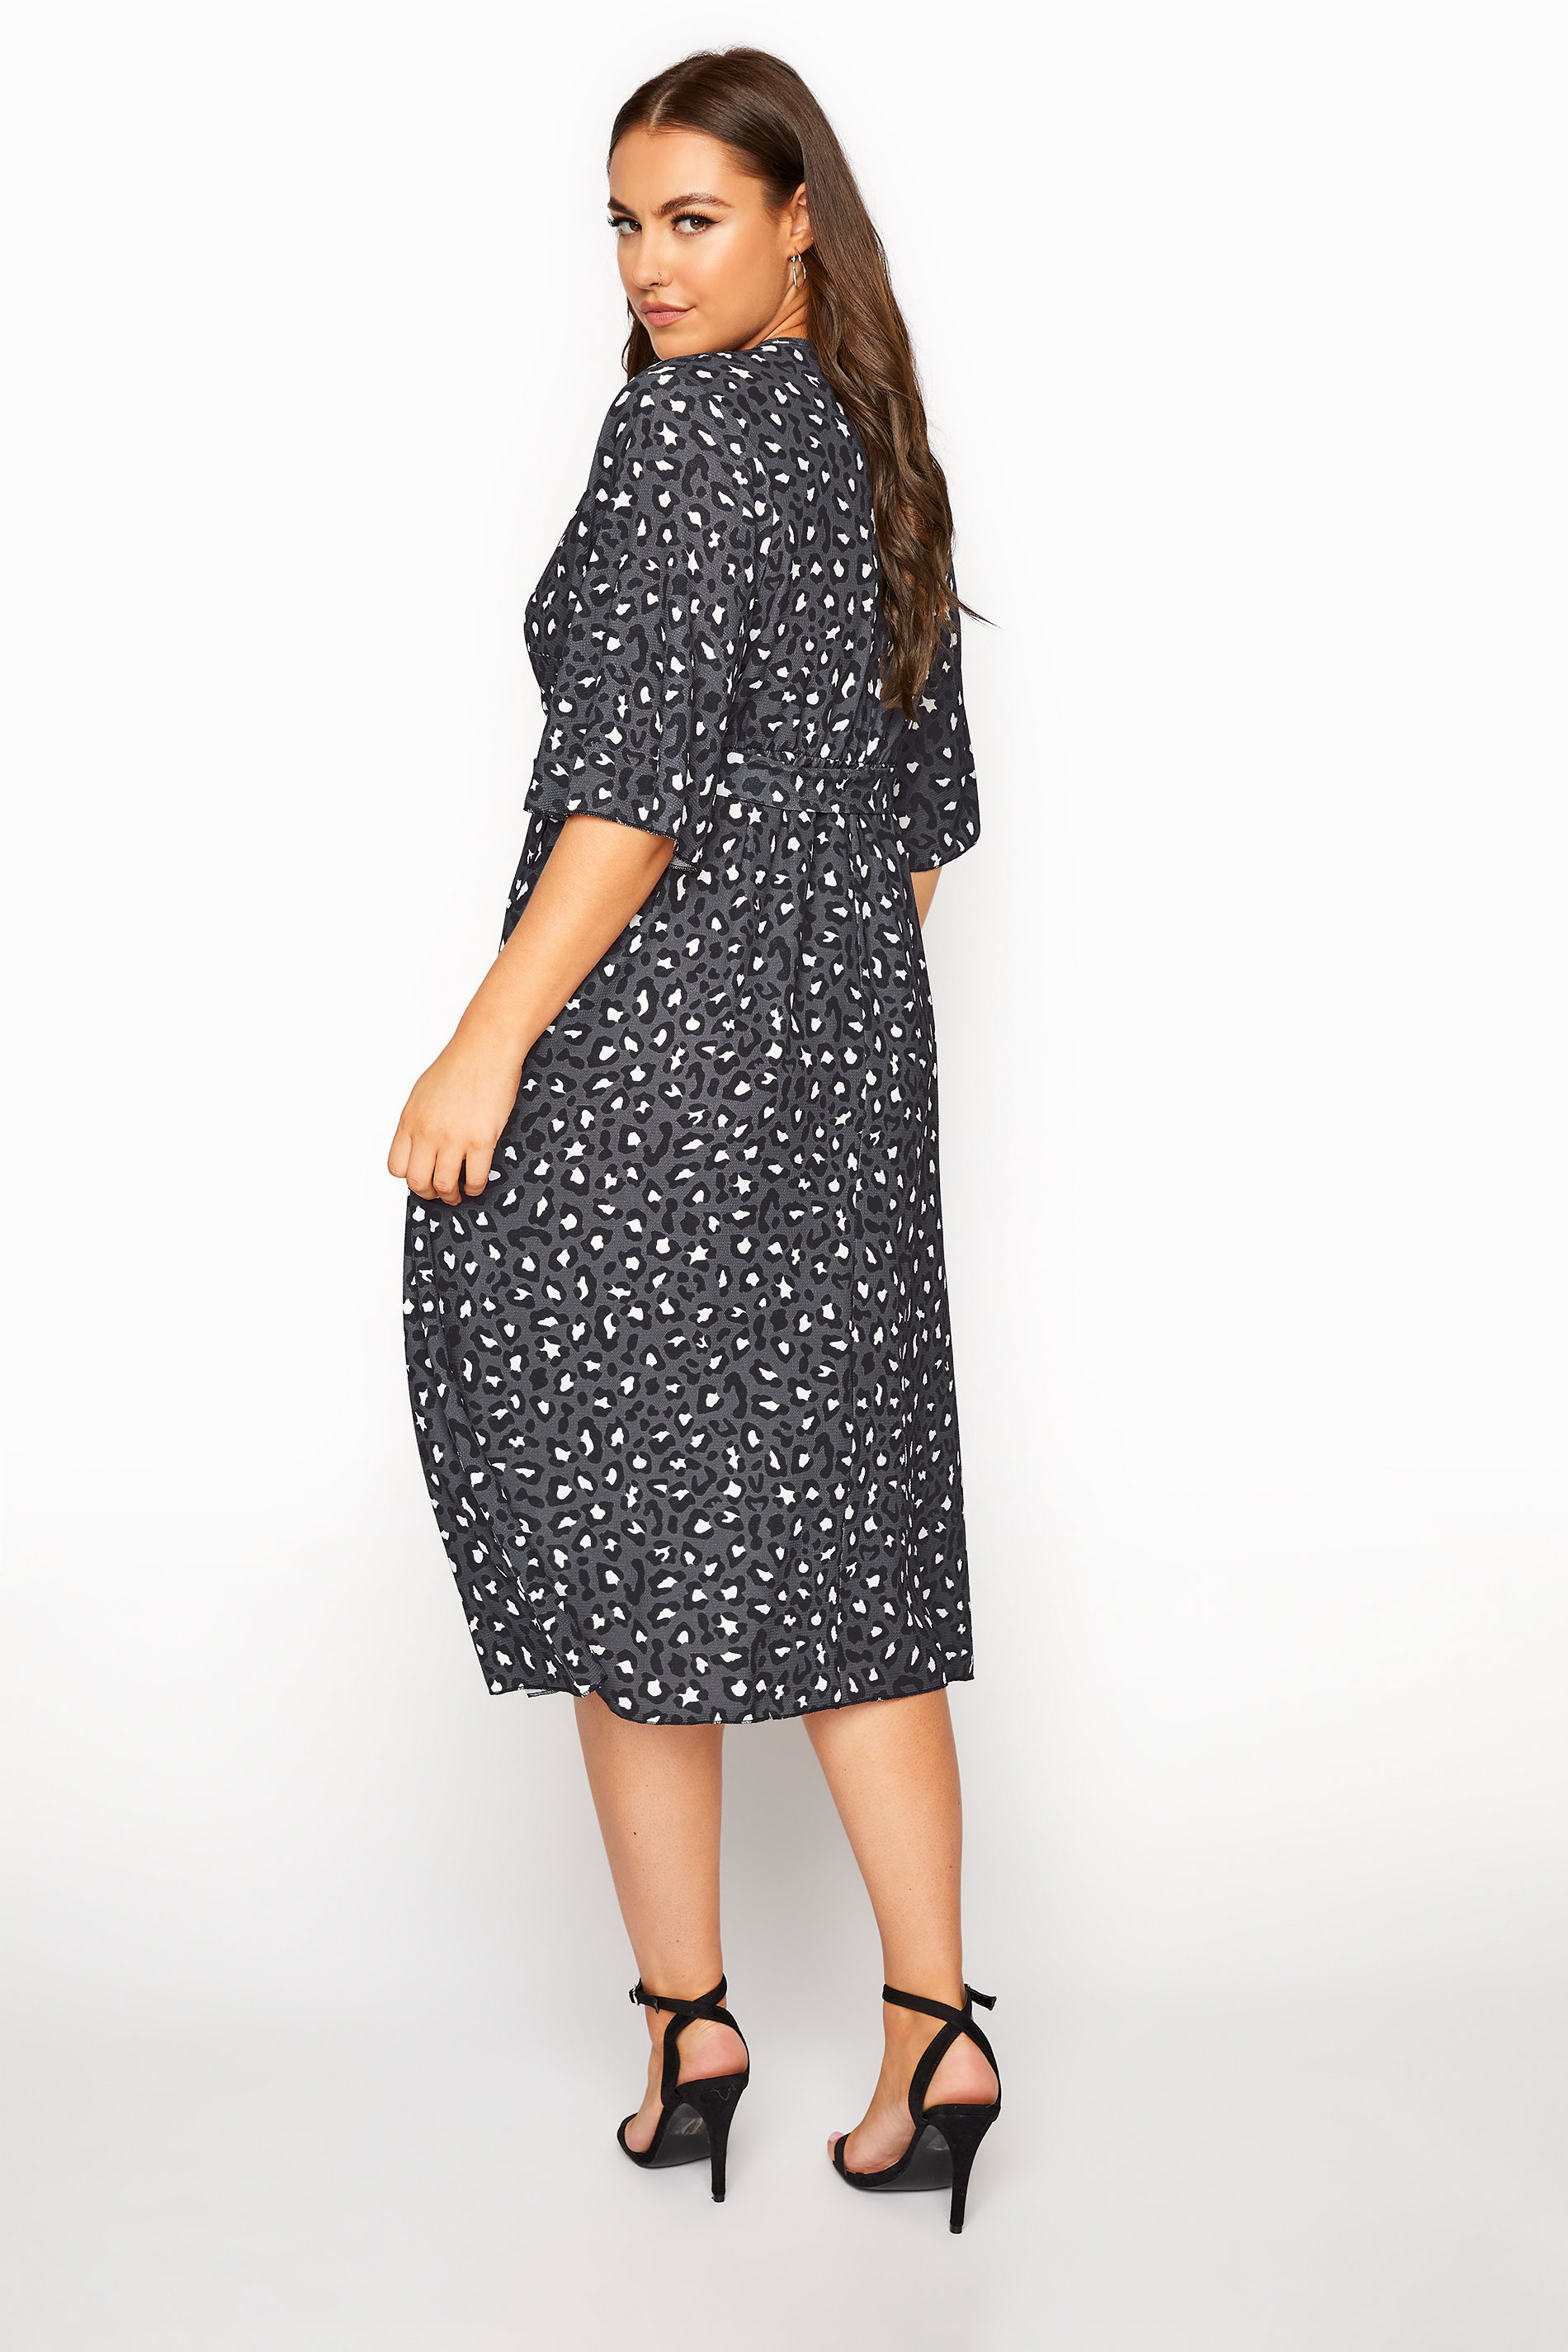 YOURS LONDON Plus Size Grey Leopard Midi Wrap Dress | Yours Clothing 3